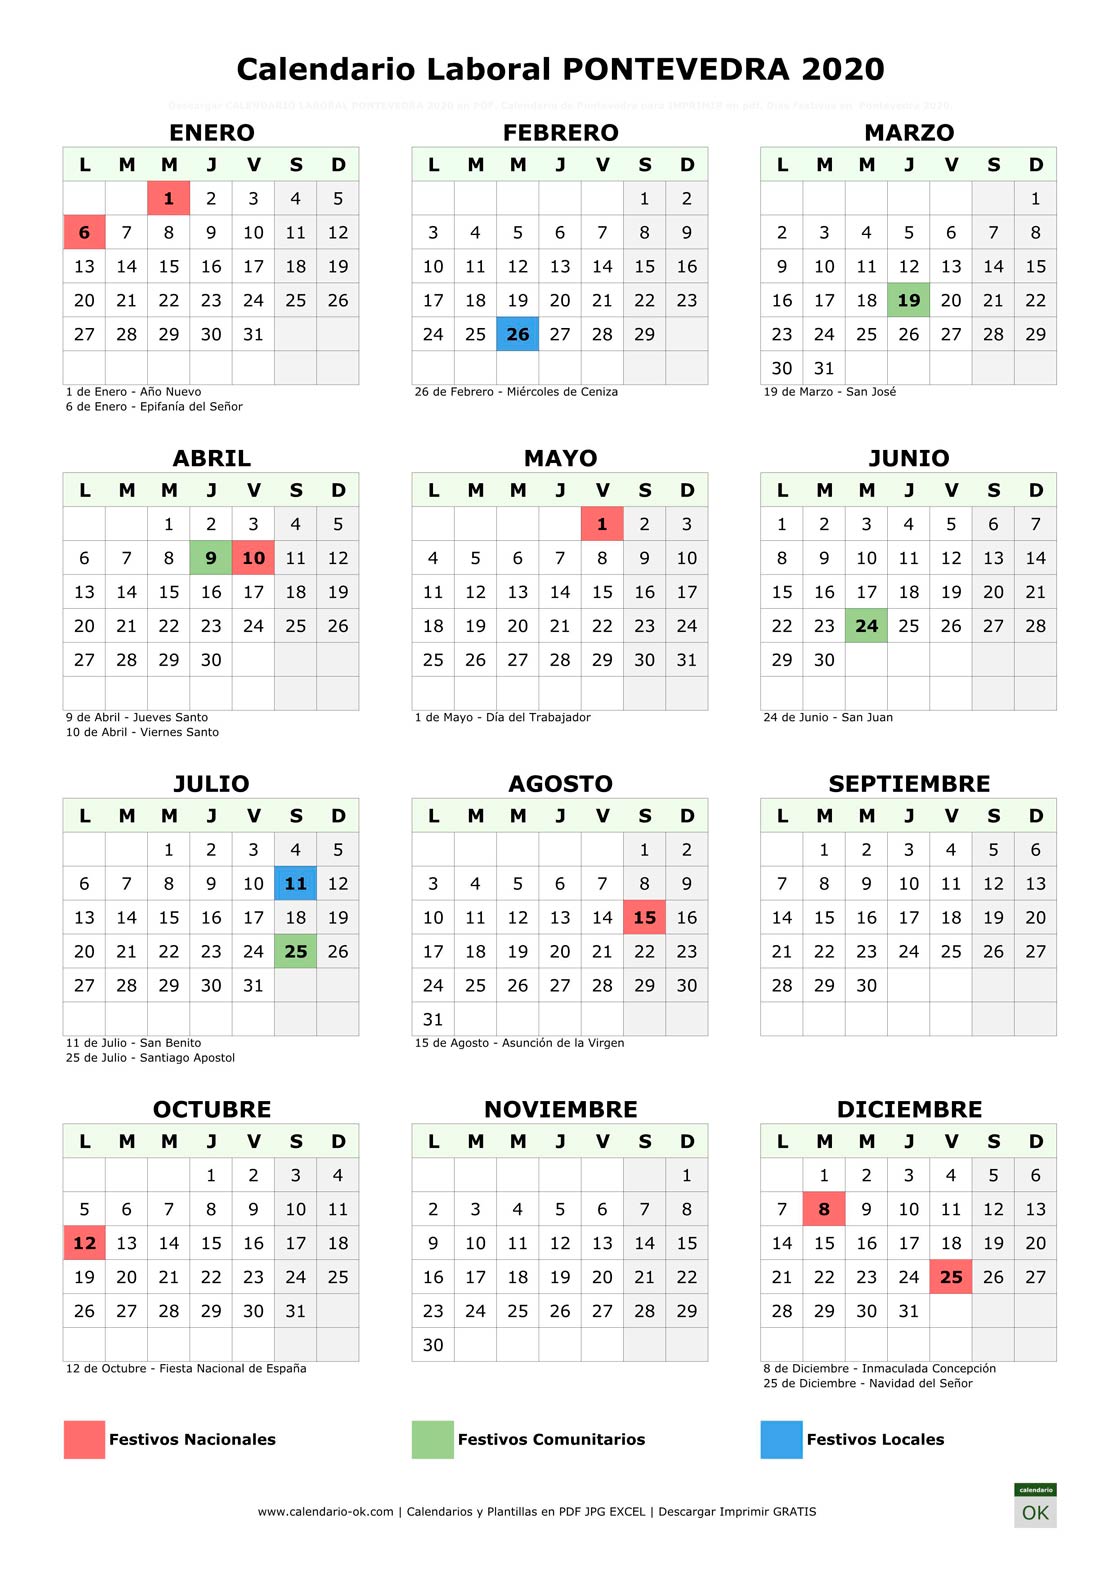 Calendario Laboral PONTEVEDRA 2020